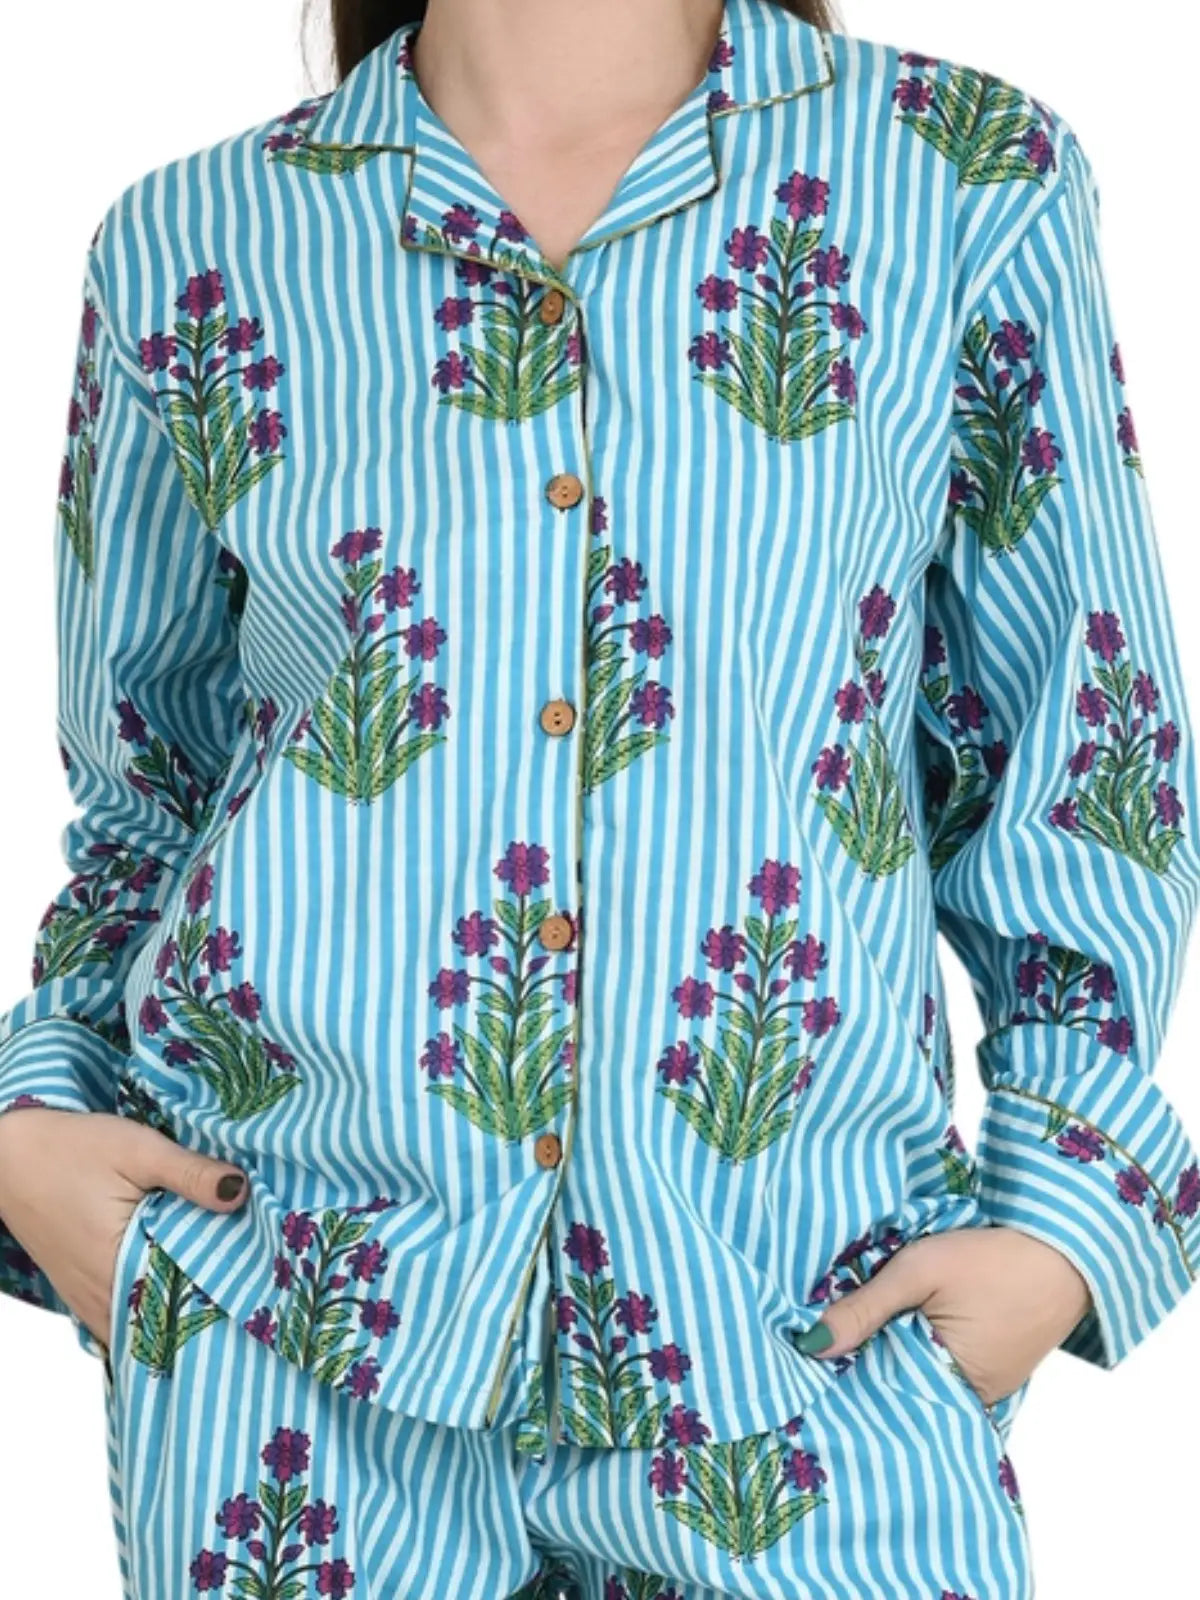 Pure Cotton PJ Set Night Shirt Panama Hand Block Printed Nightwear Spring Lounge Wear | Luxury Summer Lotus Floral Stripes Comfy Sleep Set